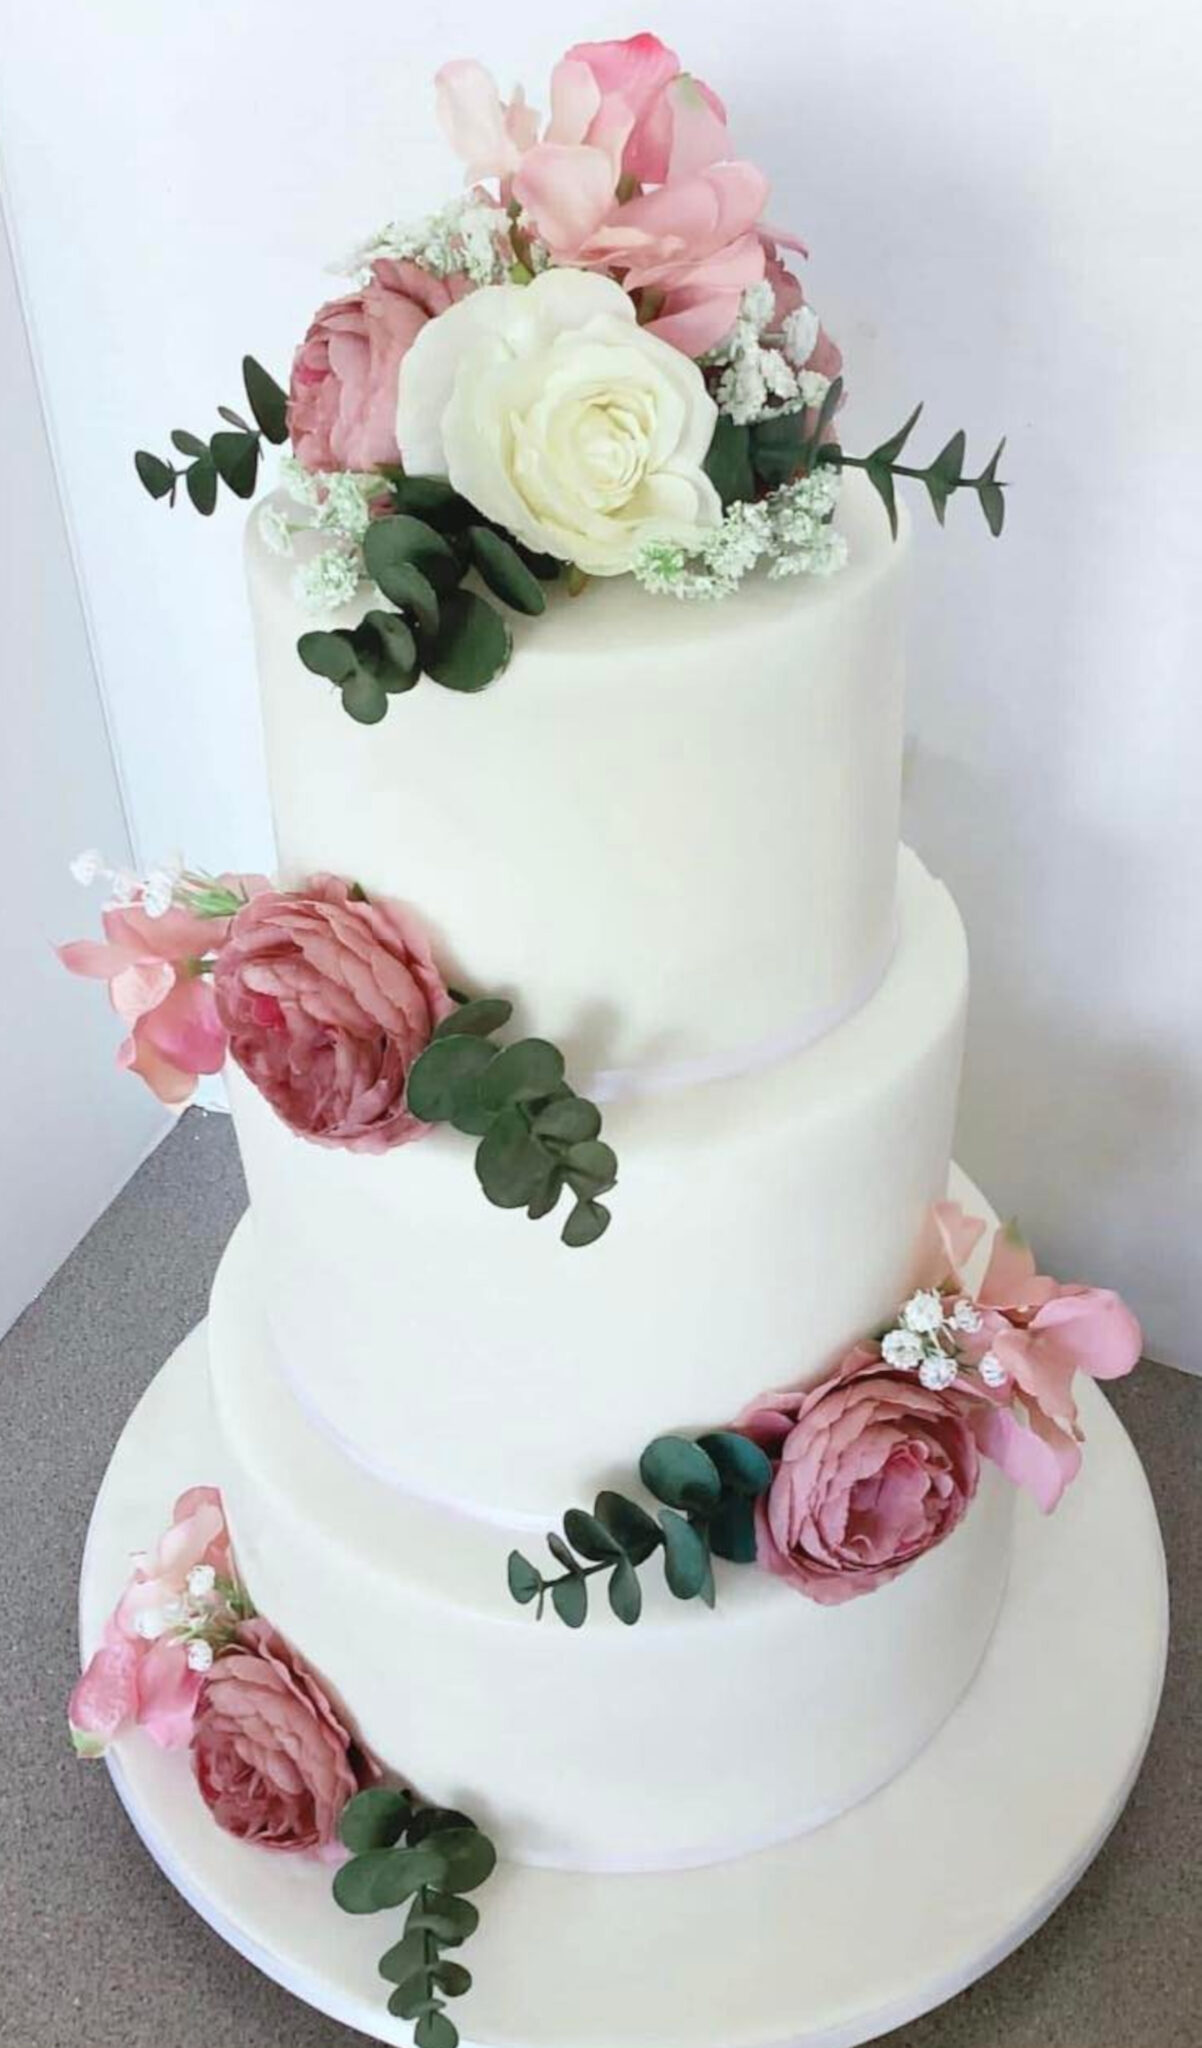 The gender reveal wedding cake.